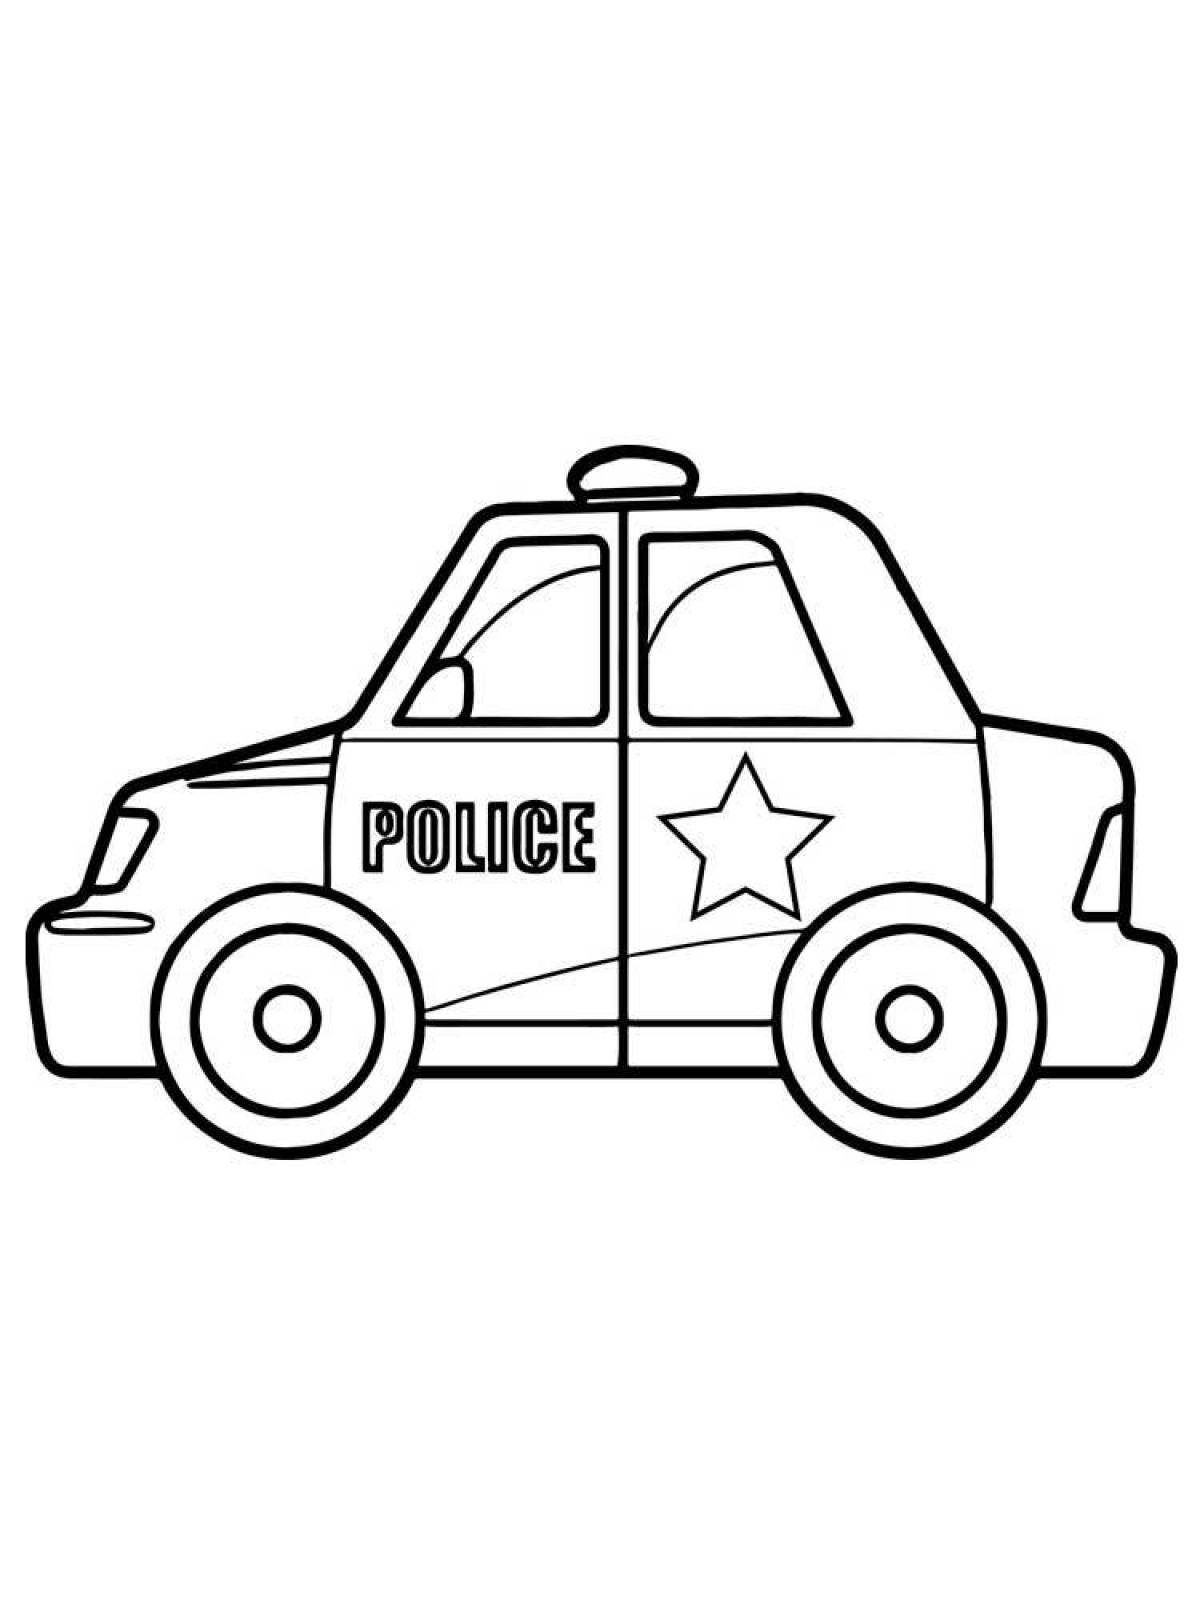 Wonderful police car coloring book for preschool children